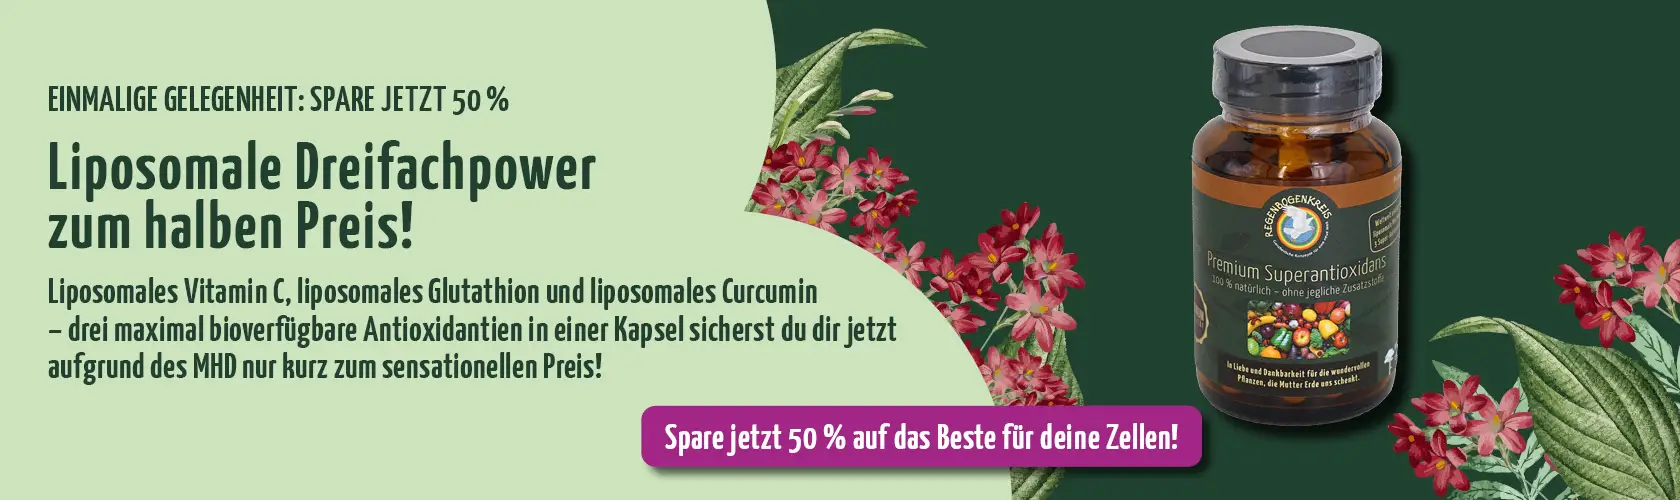 https://www.regenbogenkreis.de/premium-superantioxidans-60-kapseln